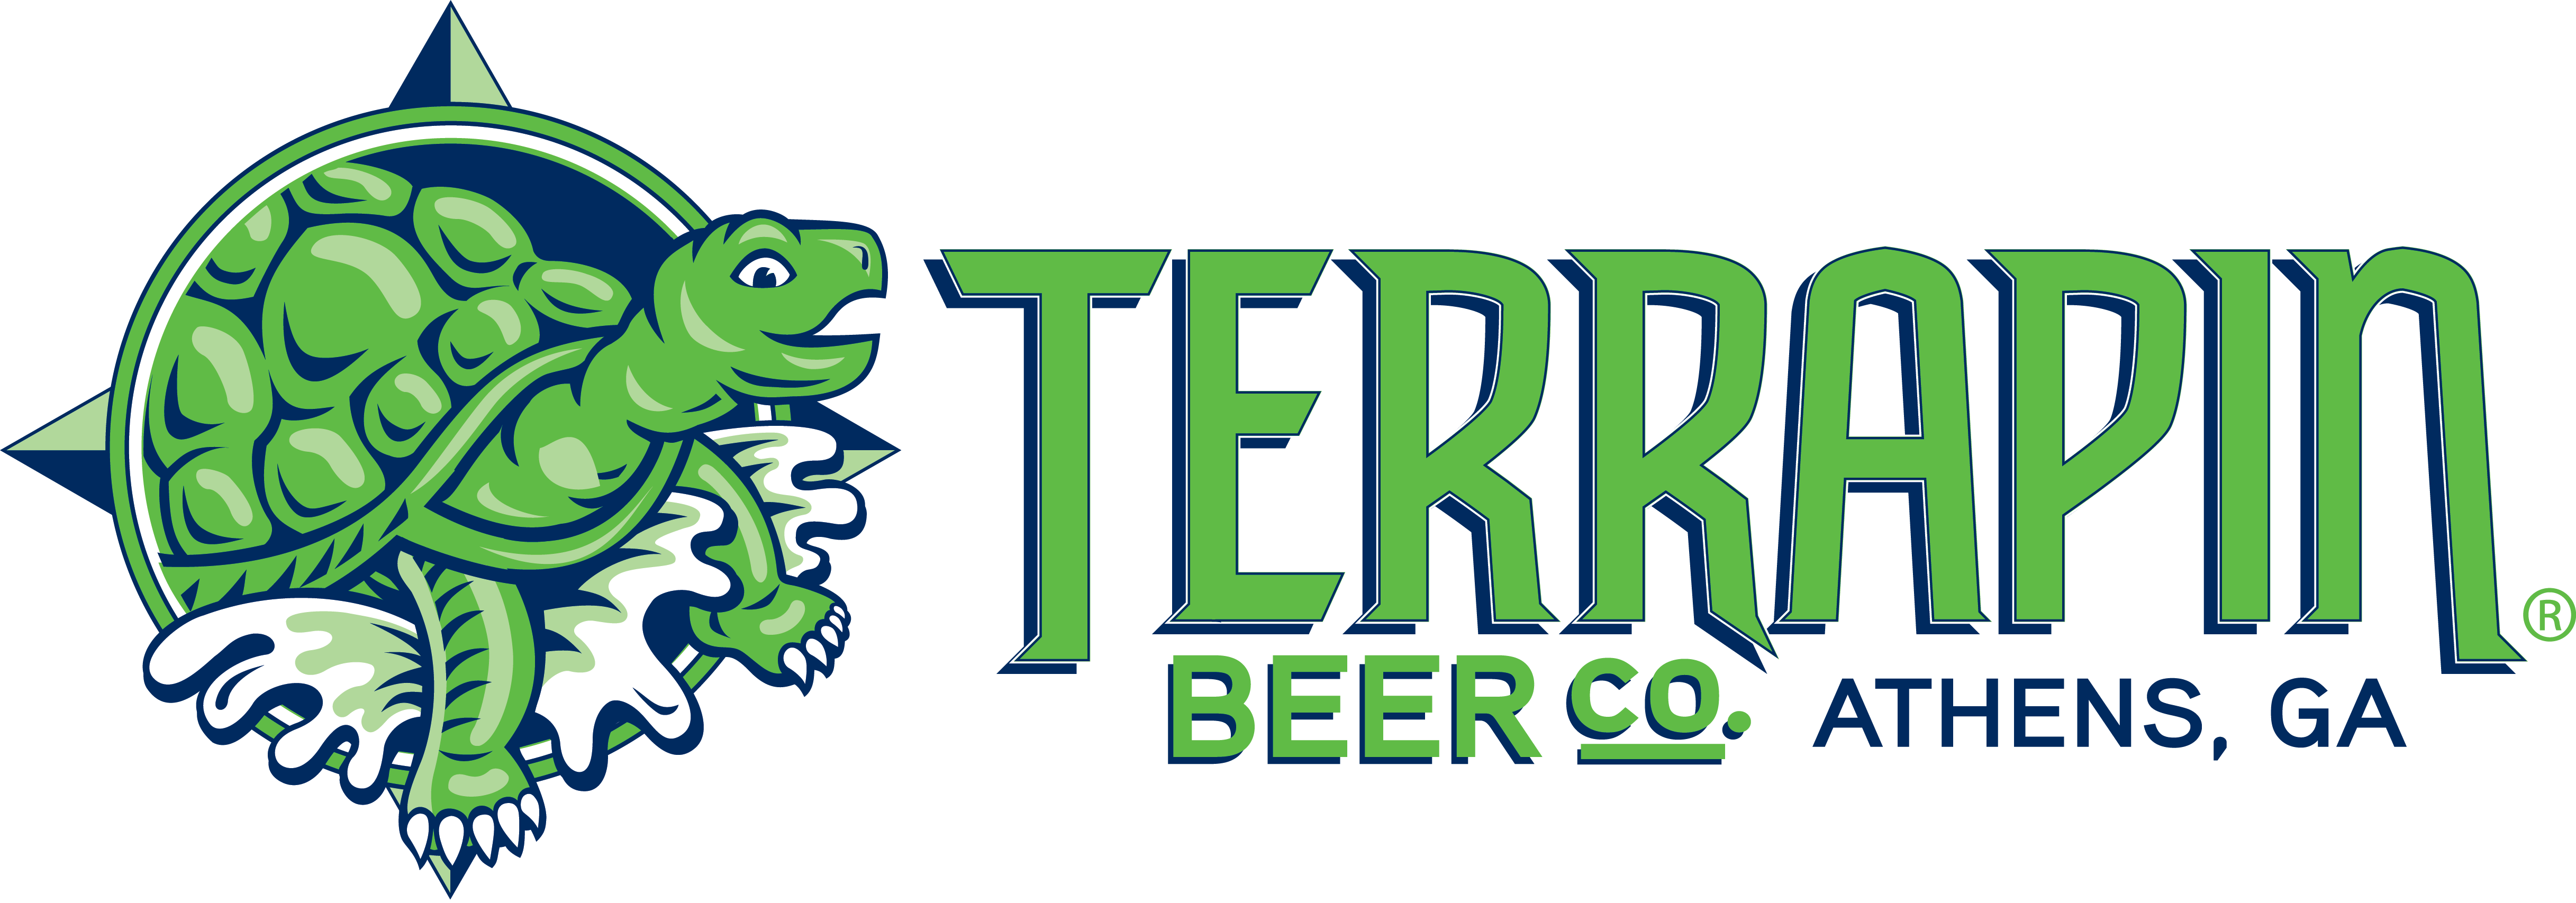 Georgia Beer Logo - JOB ALERT: Terrapin Beer Co. Hiring RIGHT NOW | Georgia Public ...